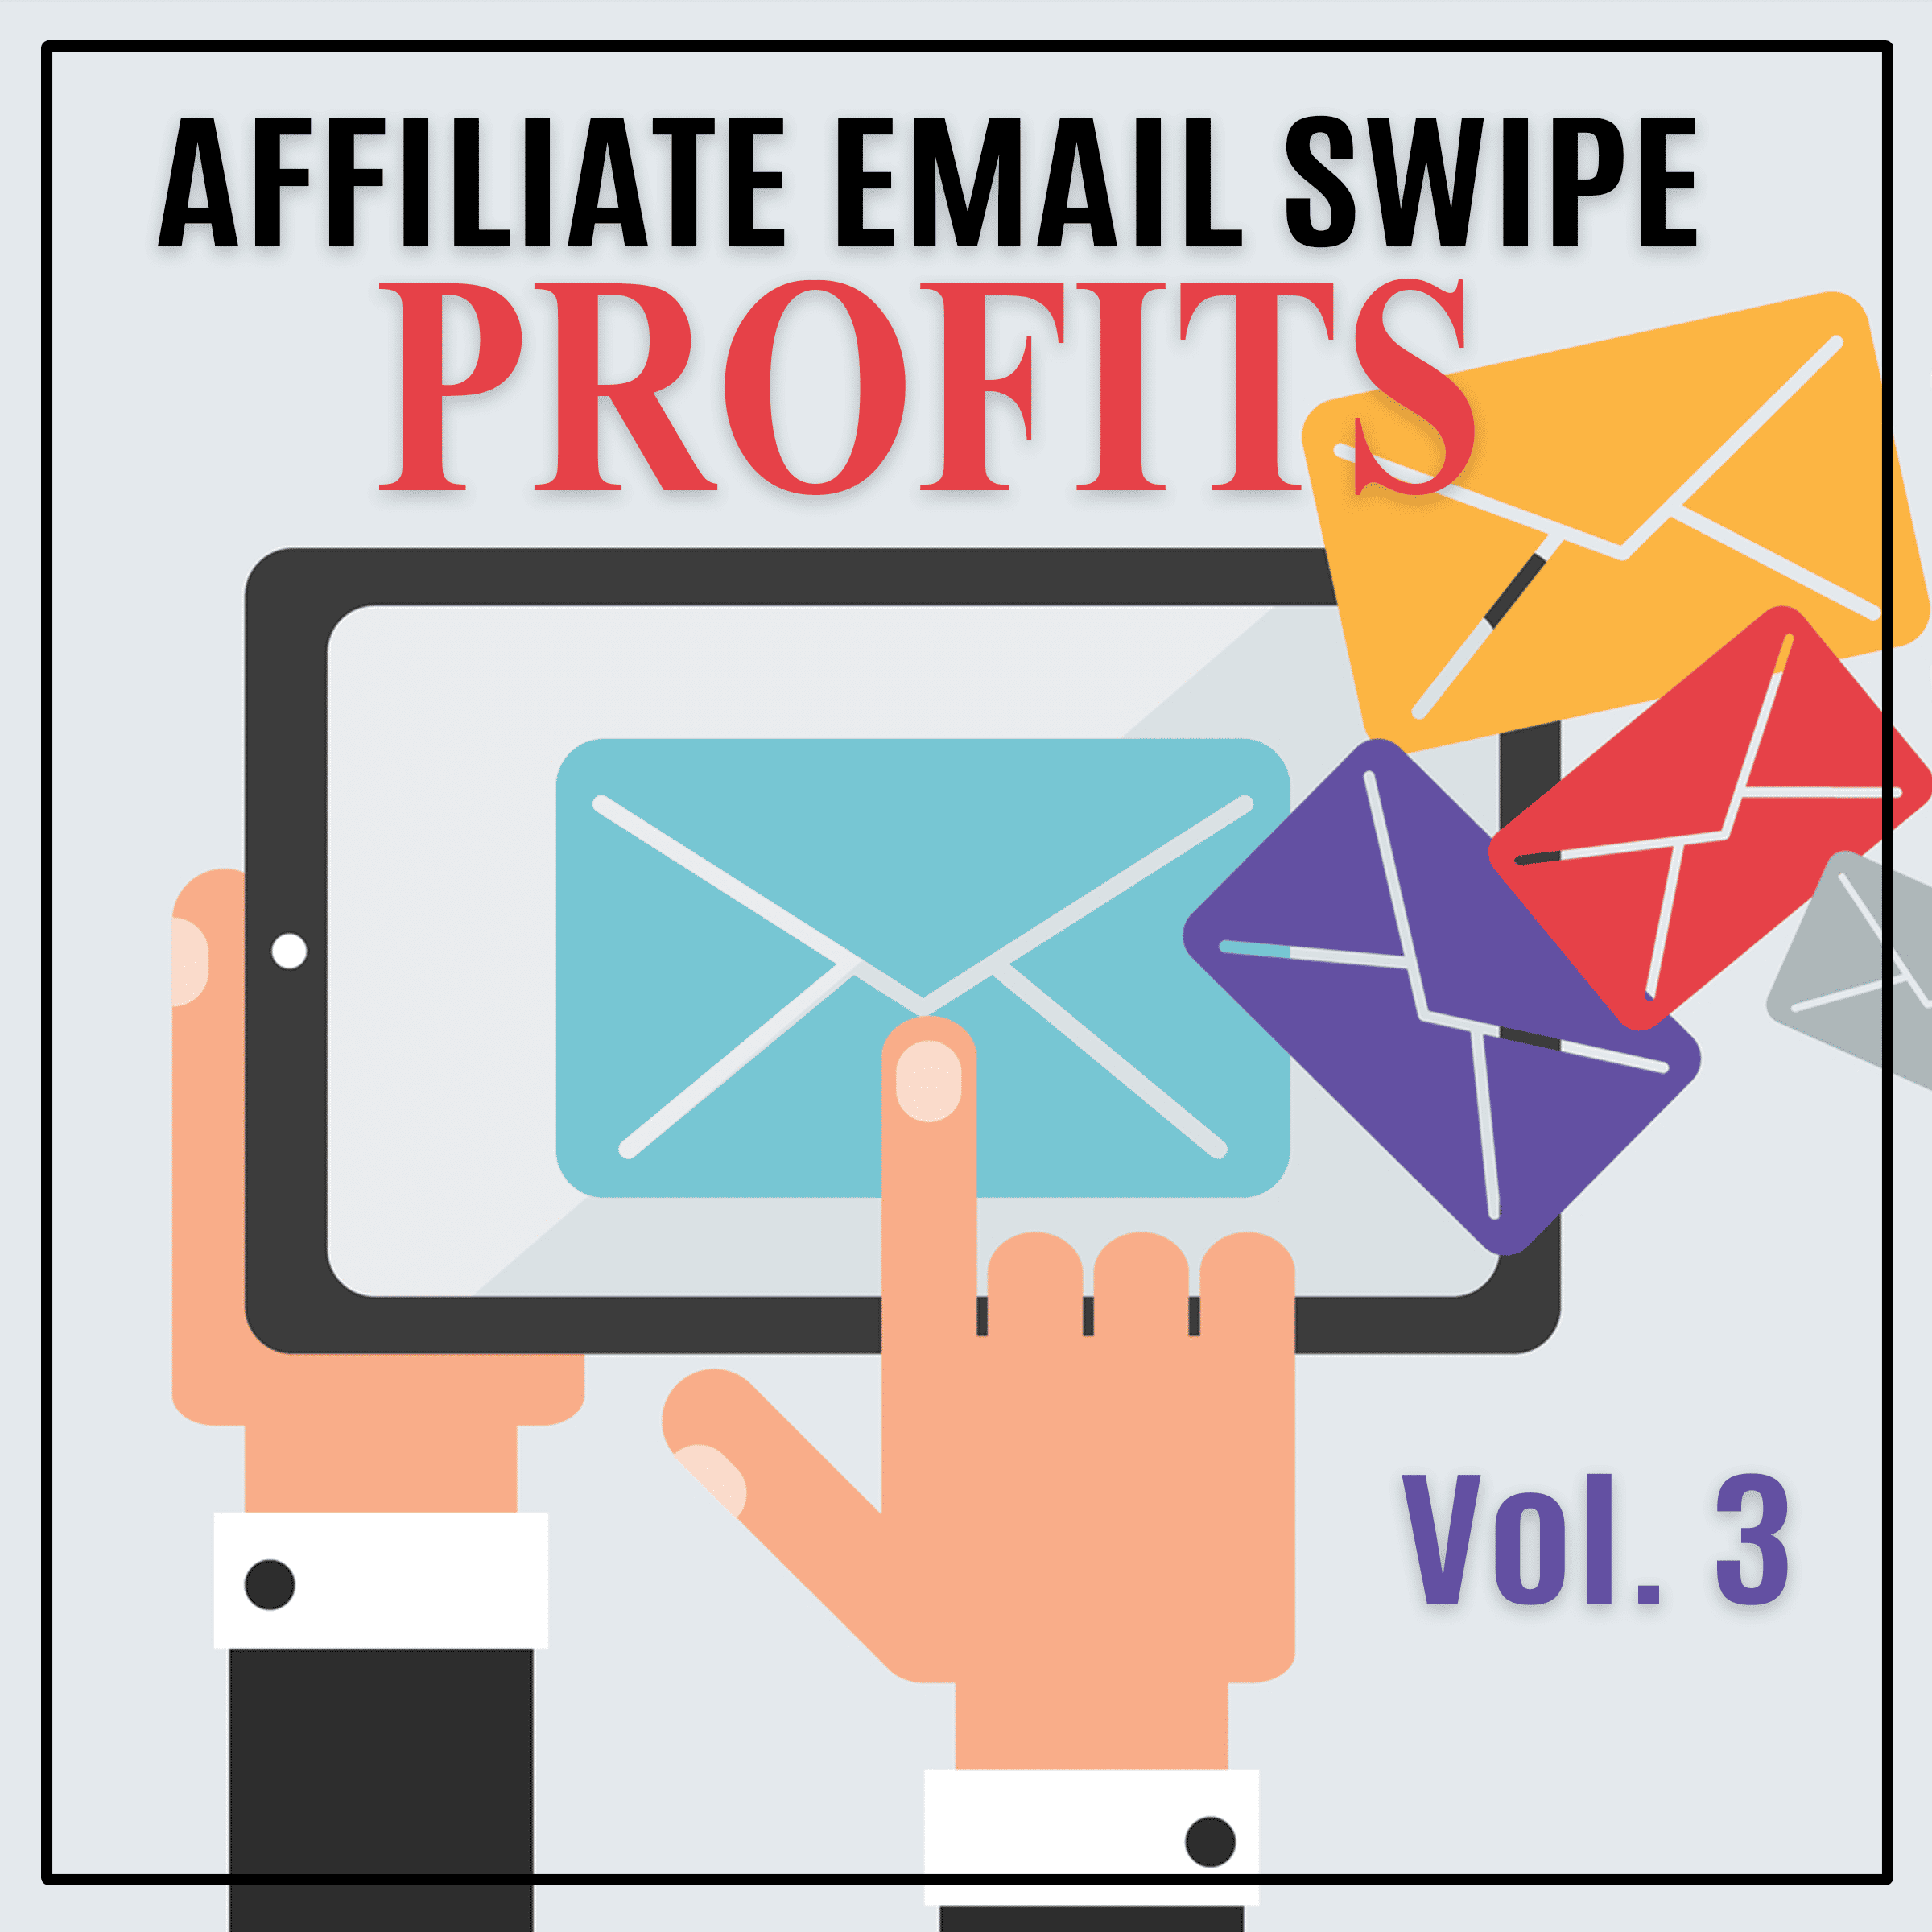 Affiliate Email Swipe Profits Vol 3